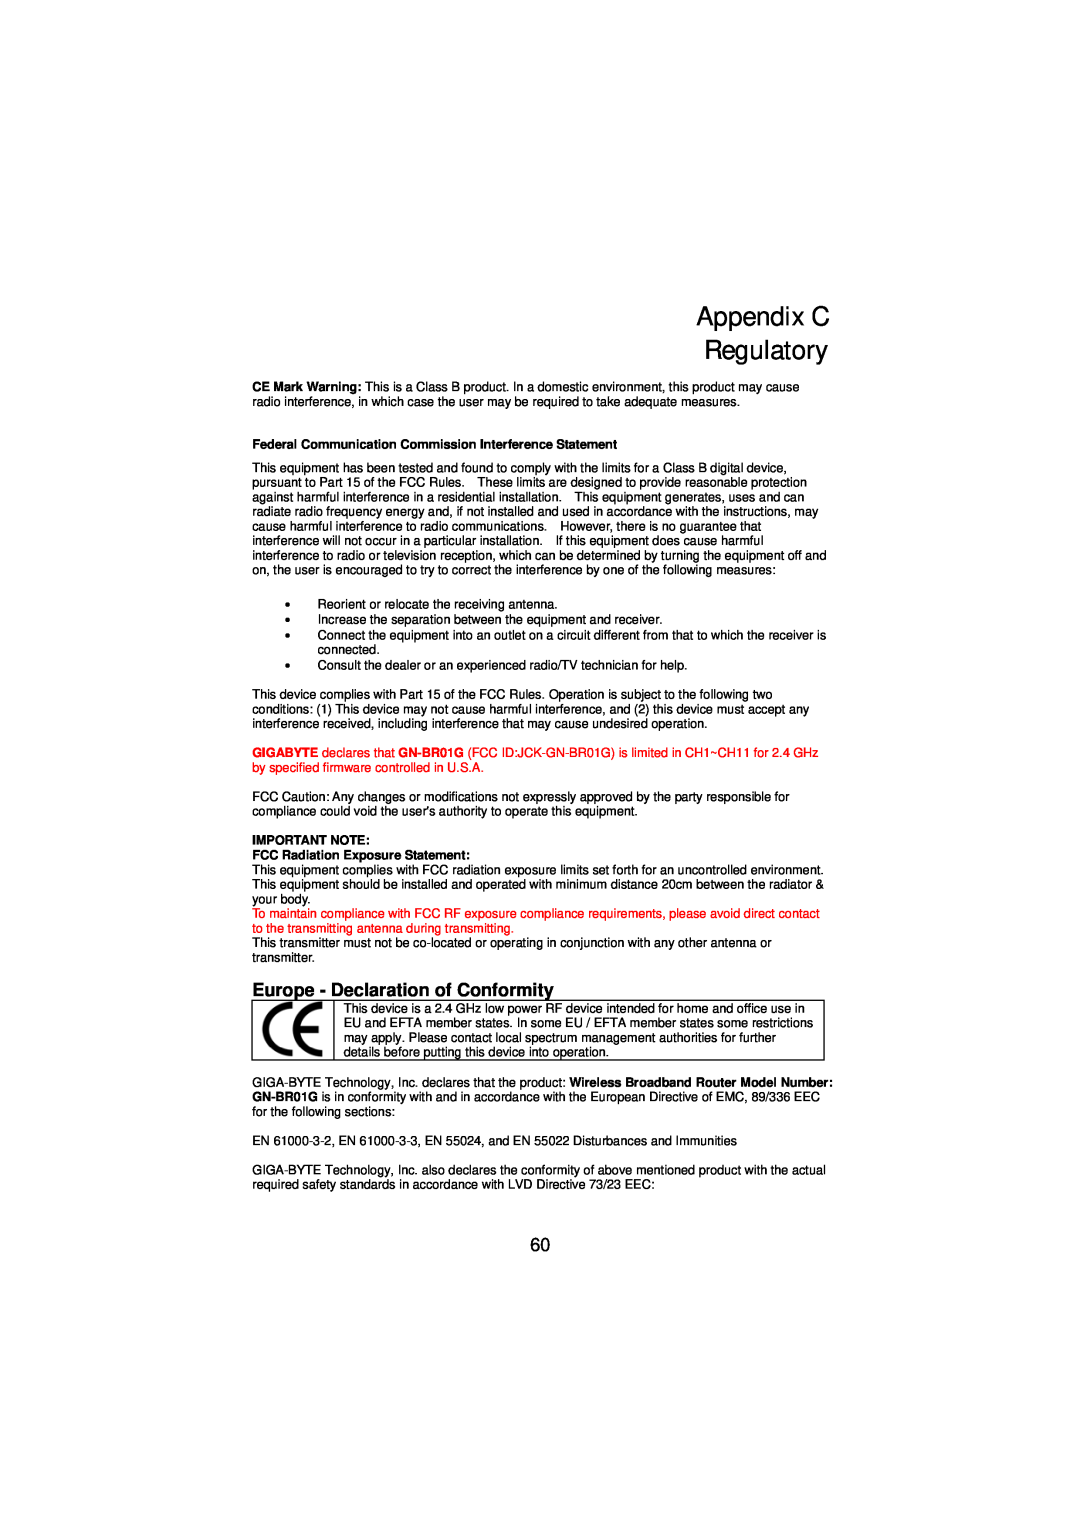 Gigabyte GN-BR01G manual Appendix C Regulatory, Europe - Declaration of Conformity 